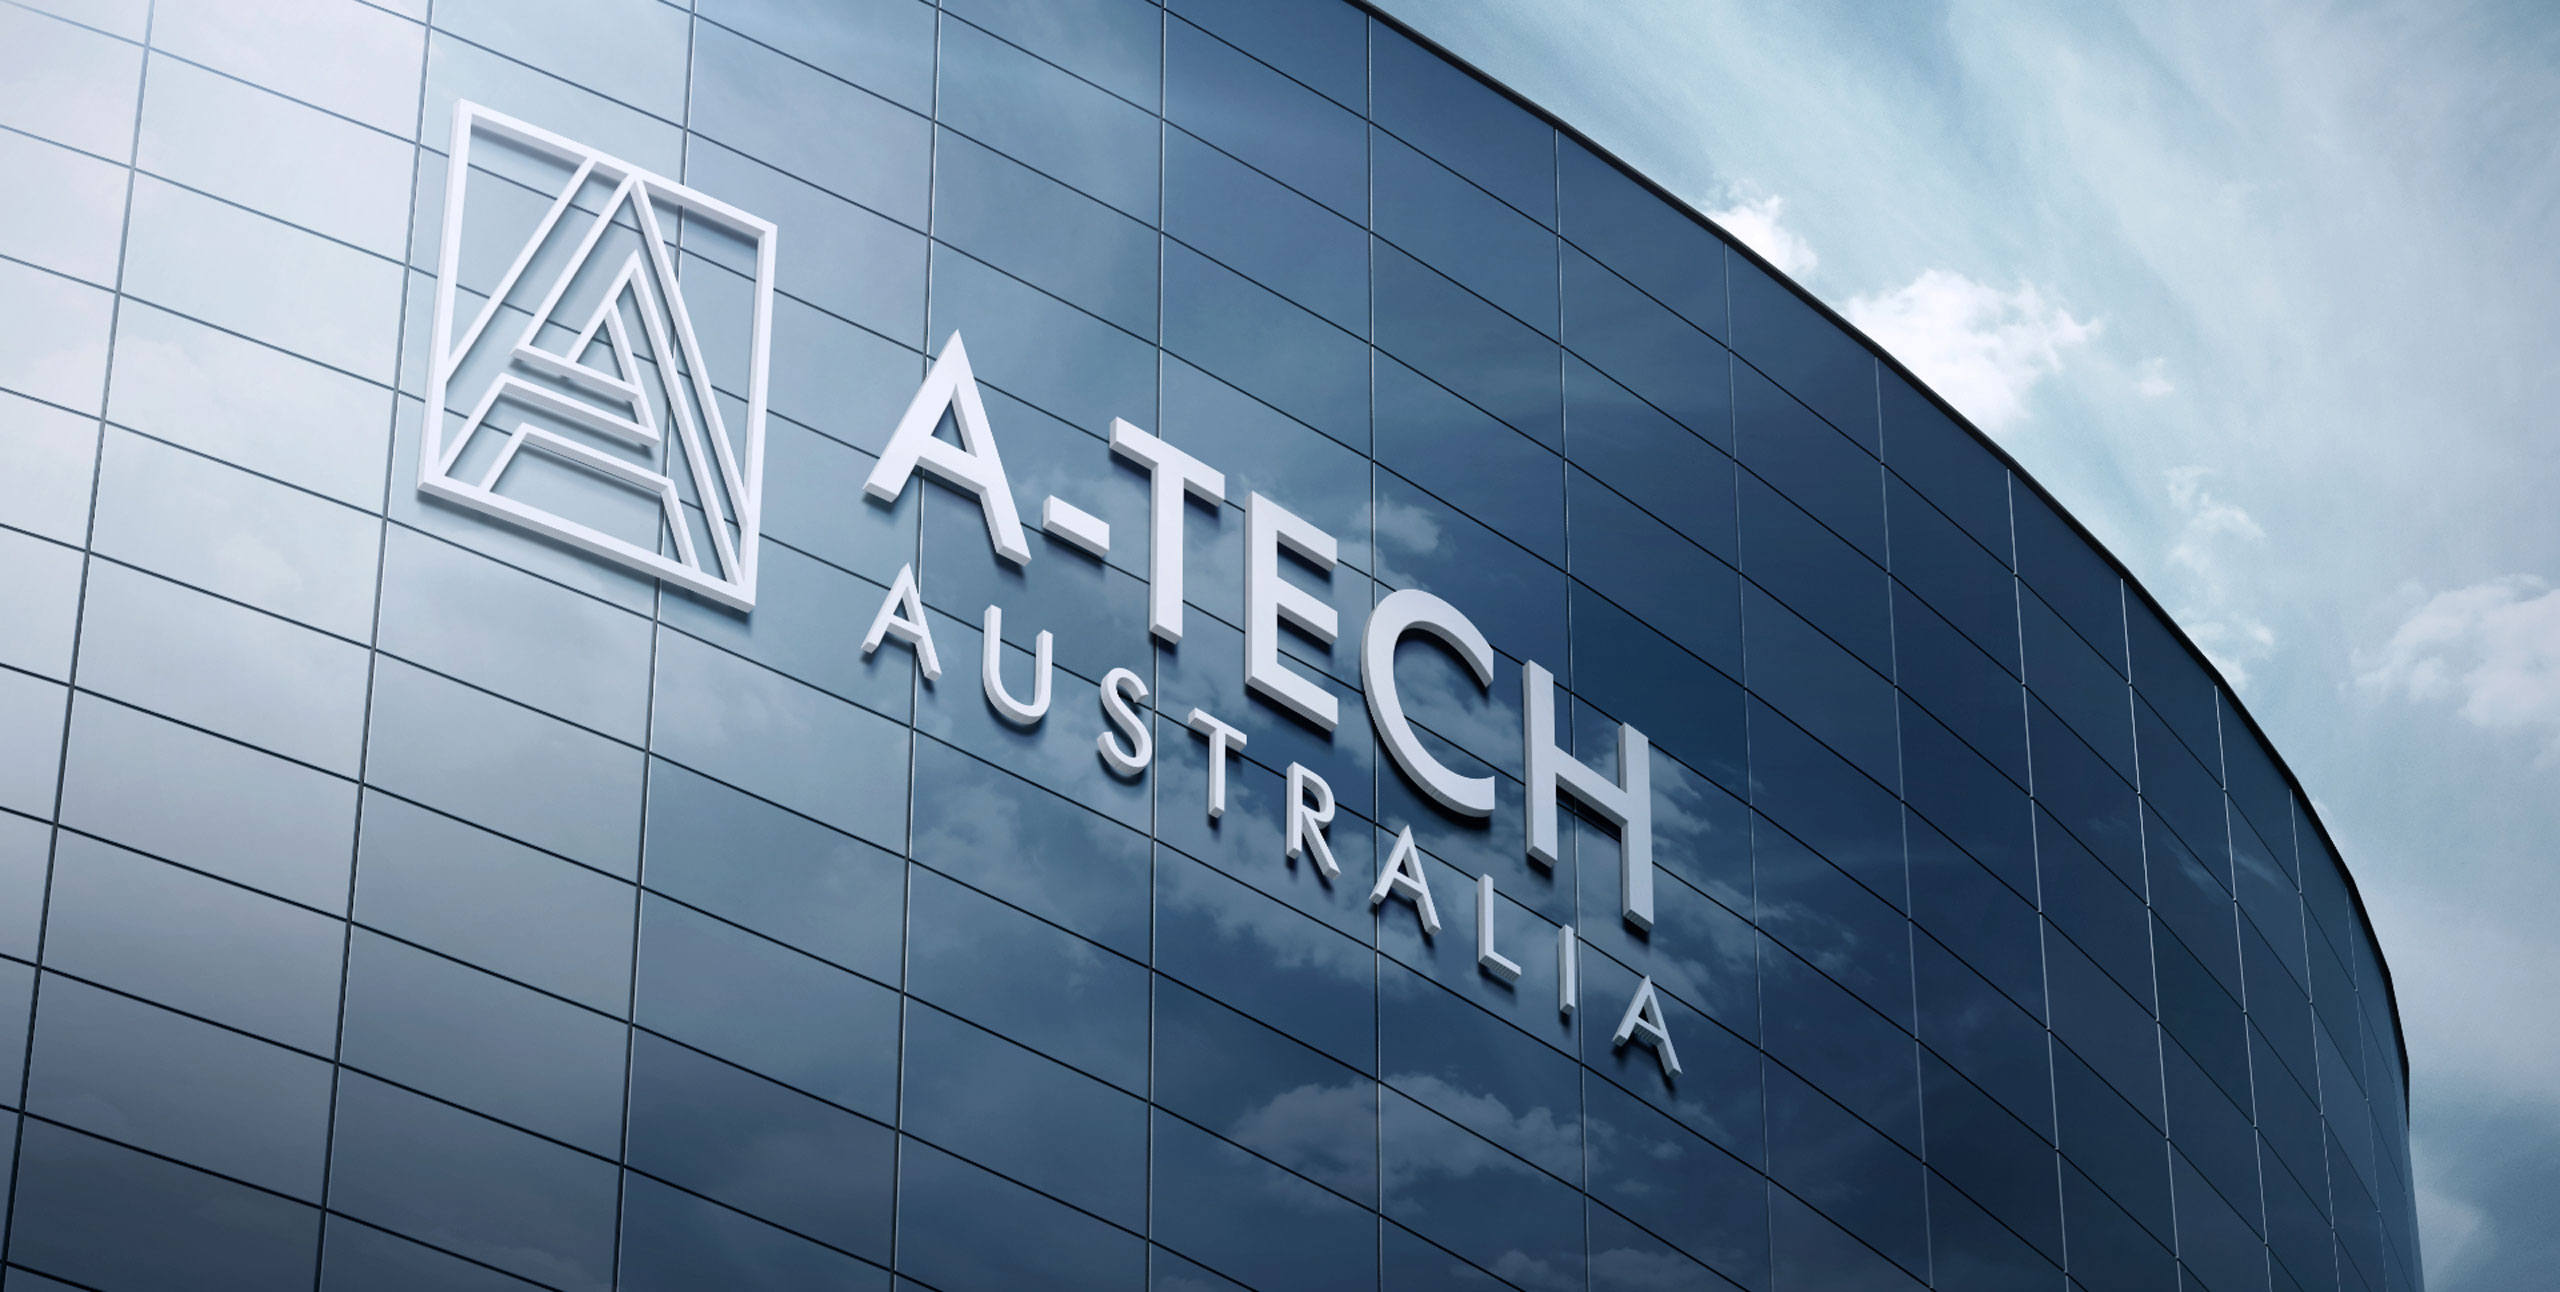 Our Creation - A- Tech Australia